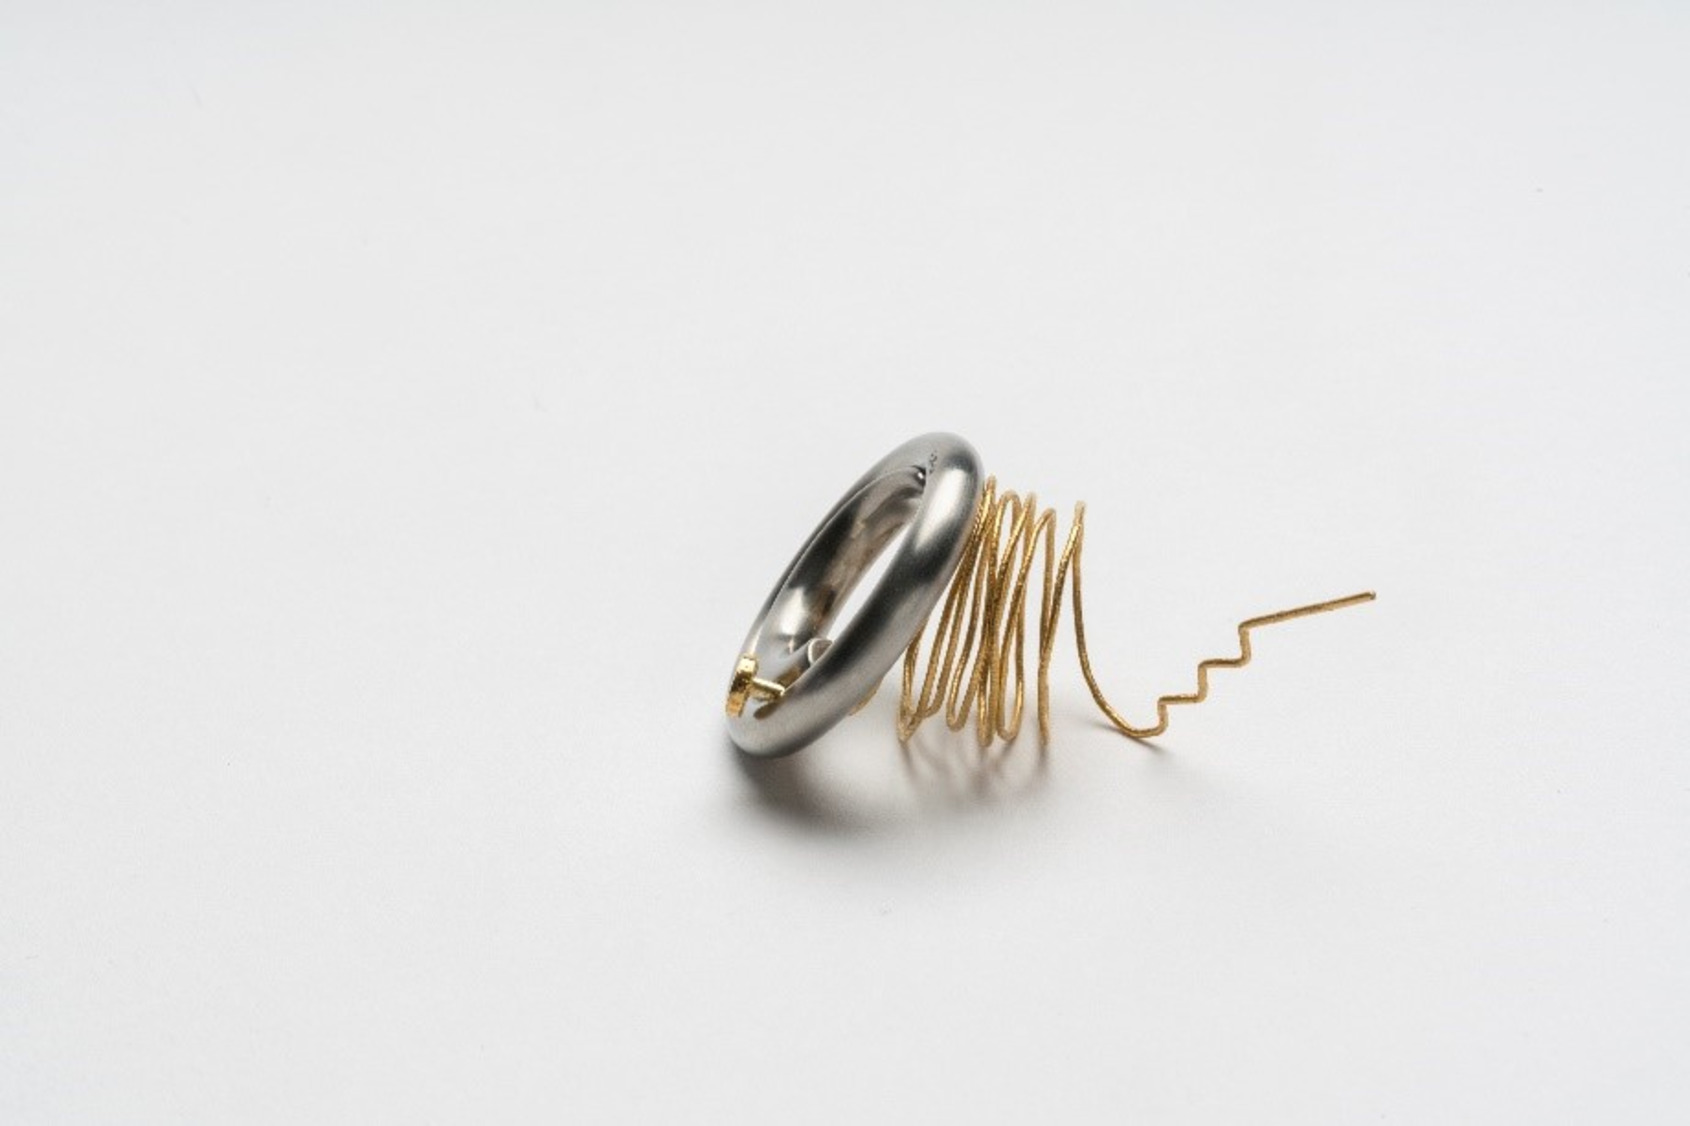 Ring, stainless steel, fine gold, 1983, 3x10cm; Schmuckmuseum Pforzheim, Germany by Franz Bette ©ALIEN ART 